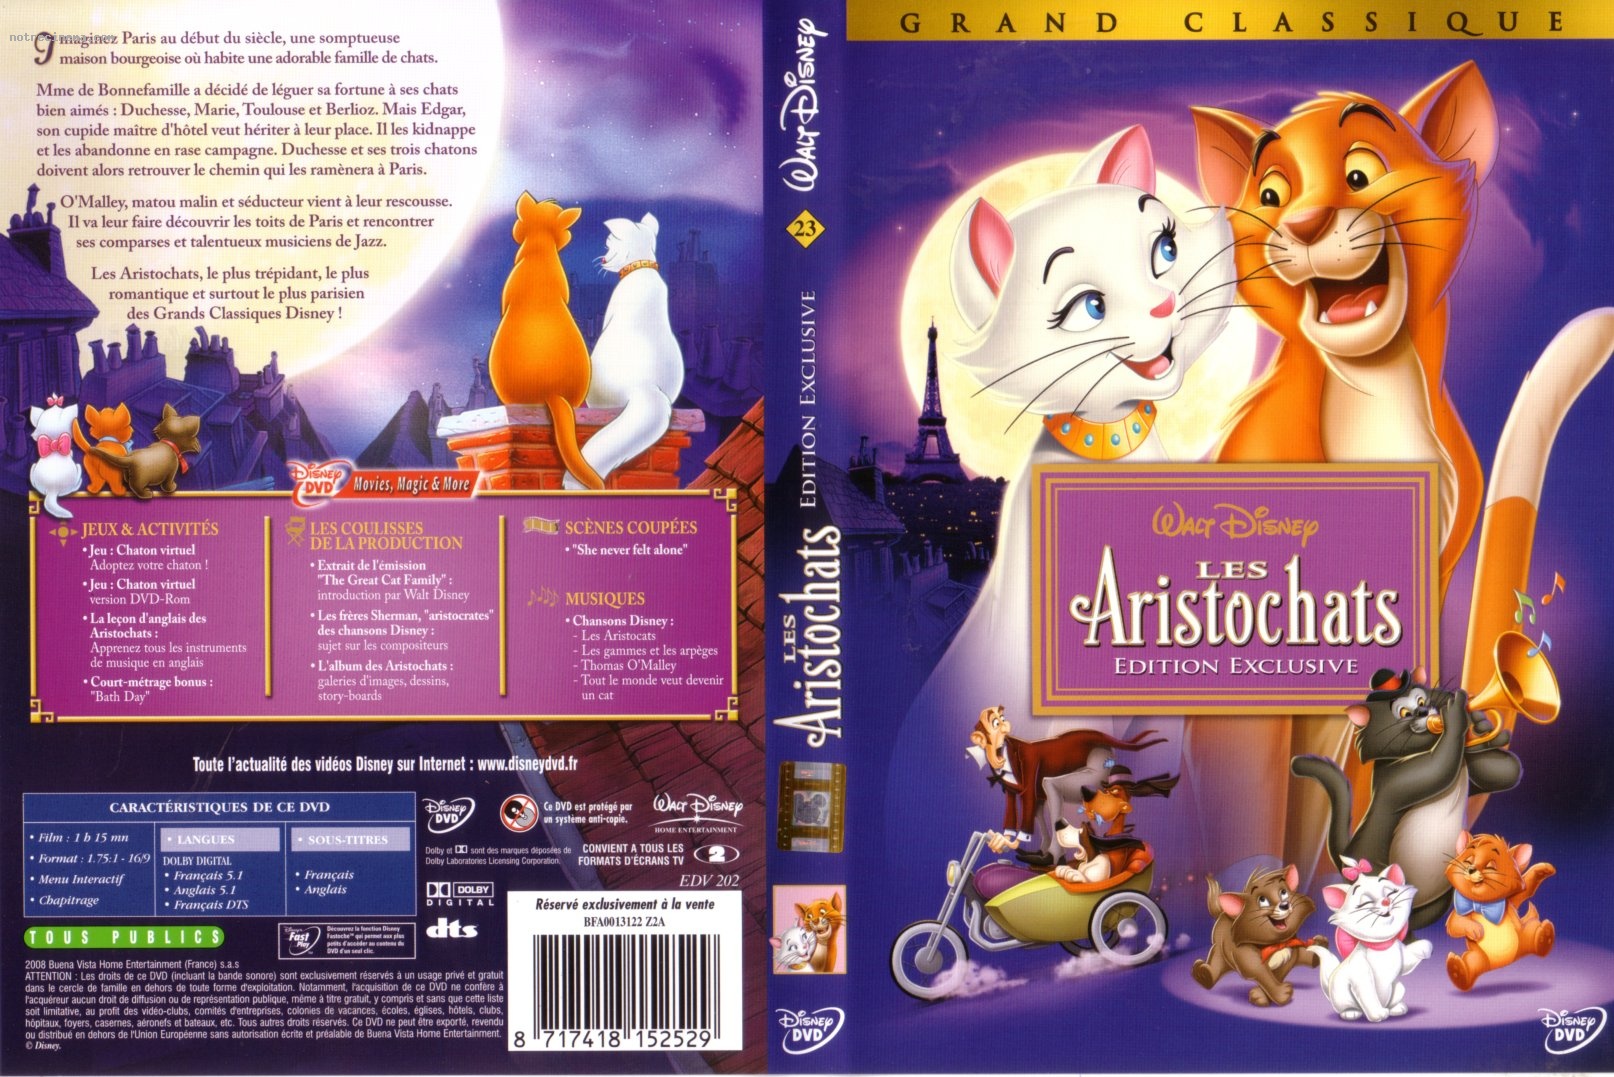 Jaquette DVD Les aristochats v3